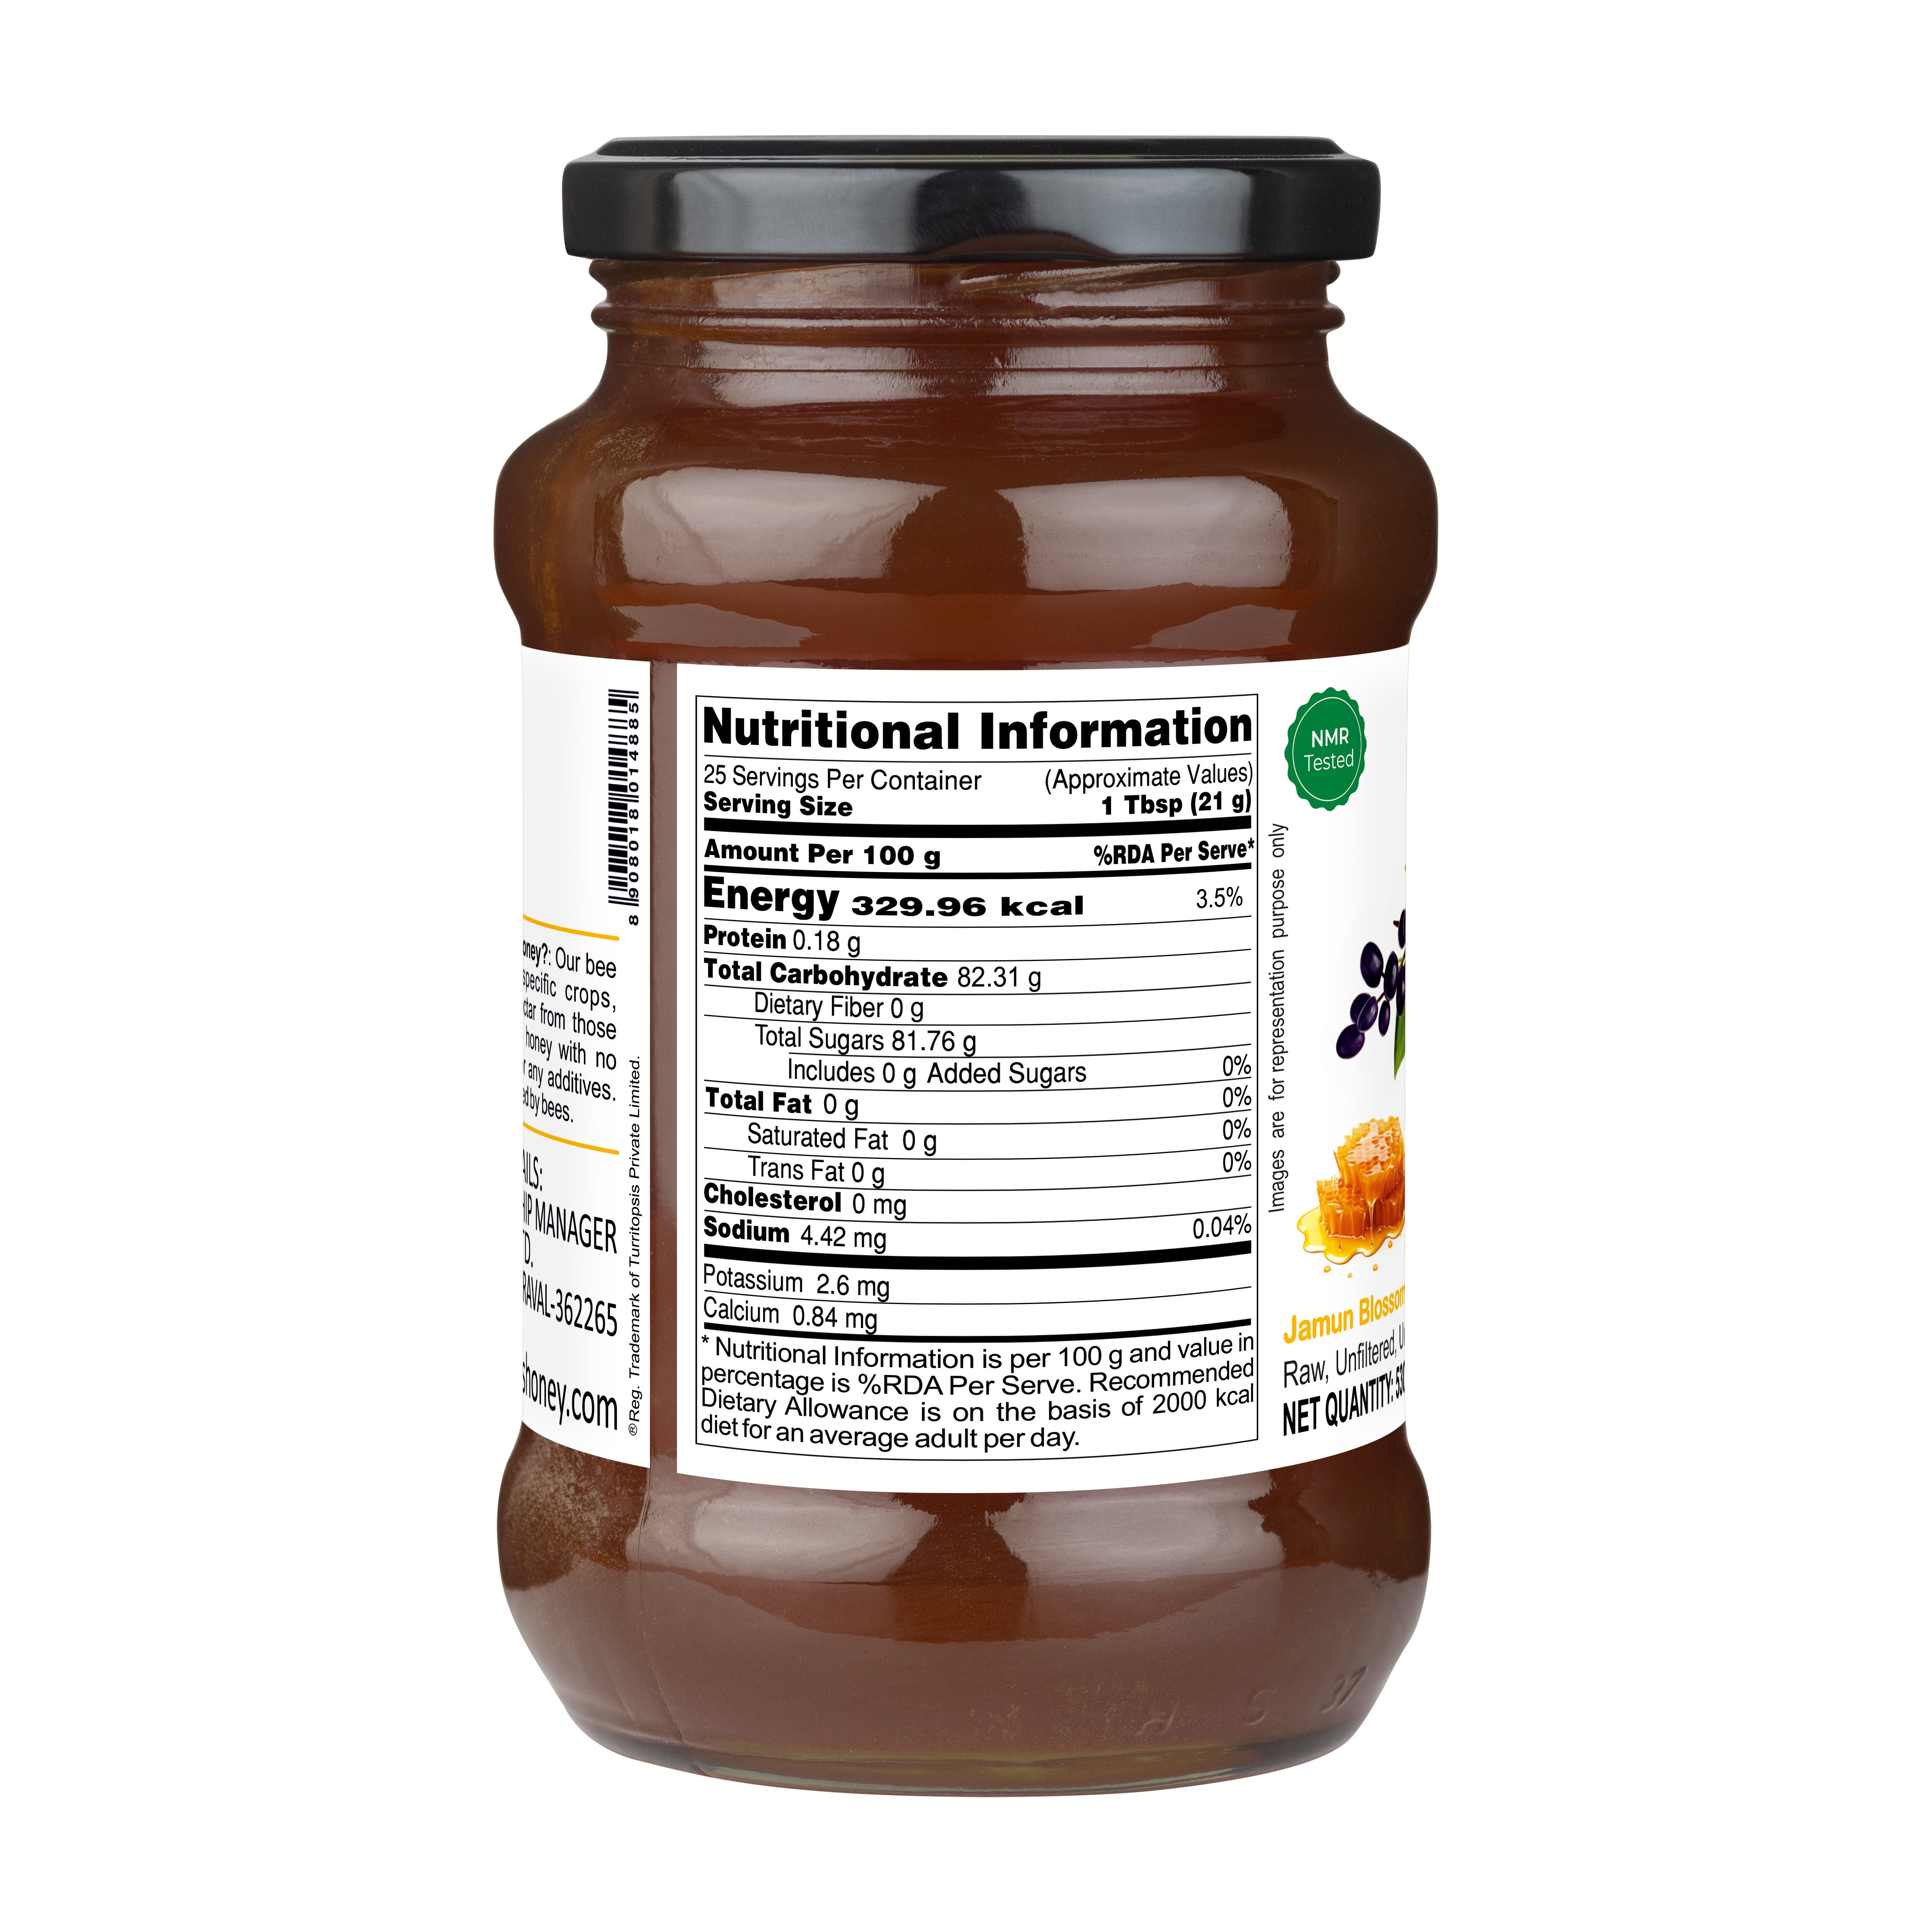 Nutritional Value of Jamun Blossom Honey